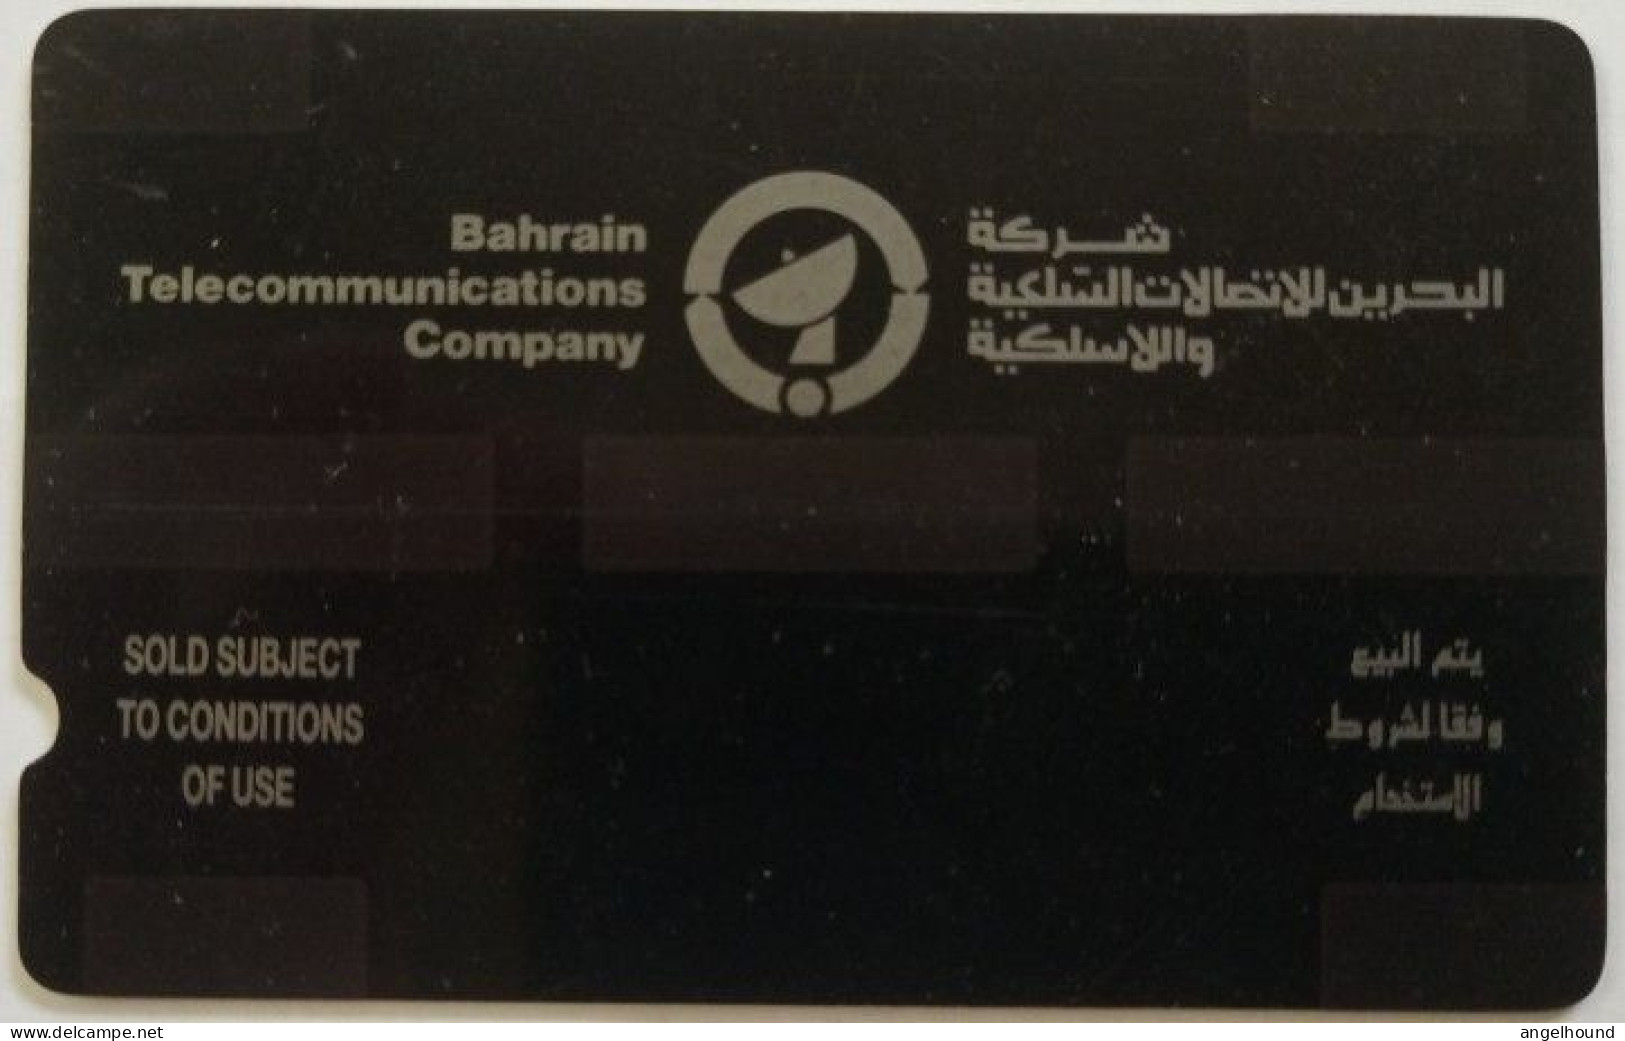 Bahrain Batelco 100 Units GPT - City Centre, Manama ( N0 C/N  Deep Notch ) - Baharain